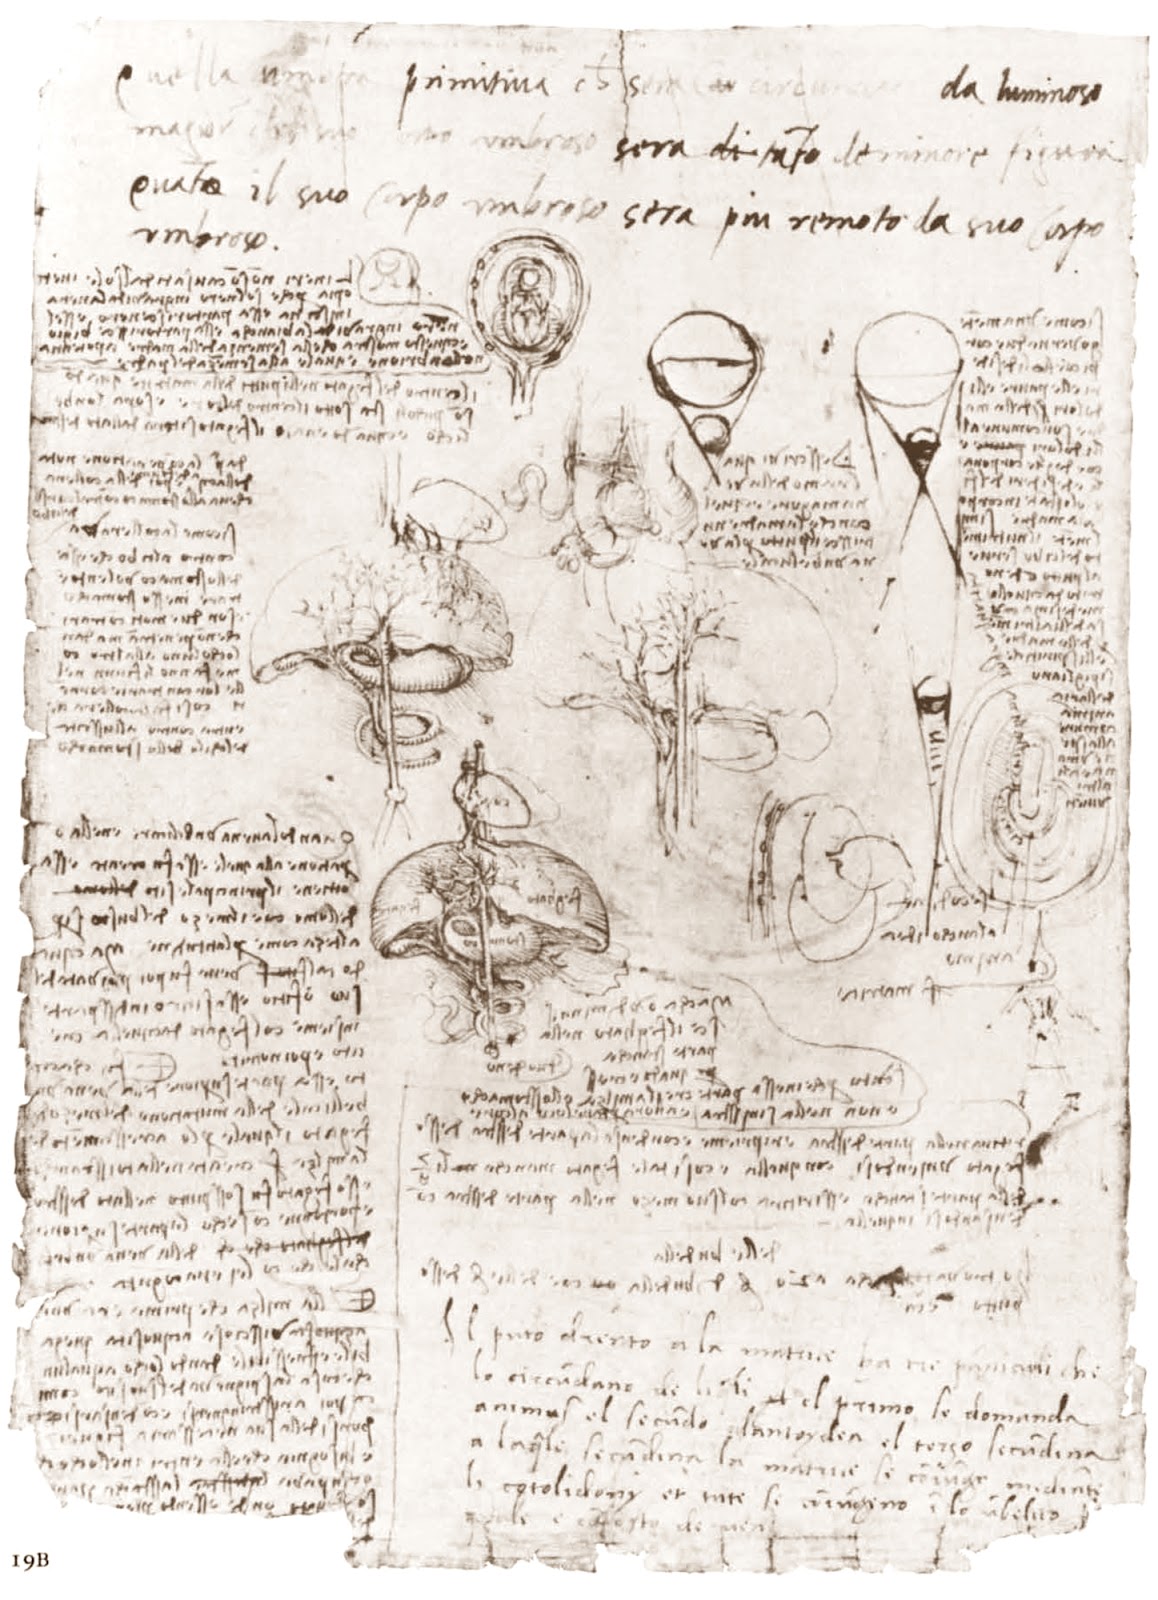 Leonardo+da+Vinci-1452-1519 (779).jpg